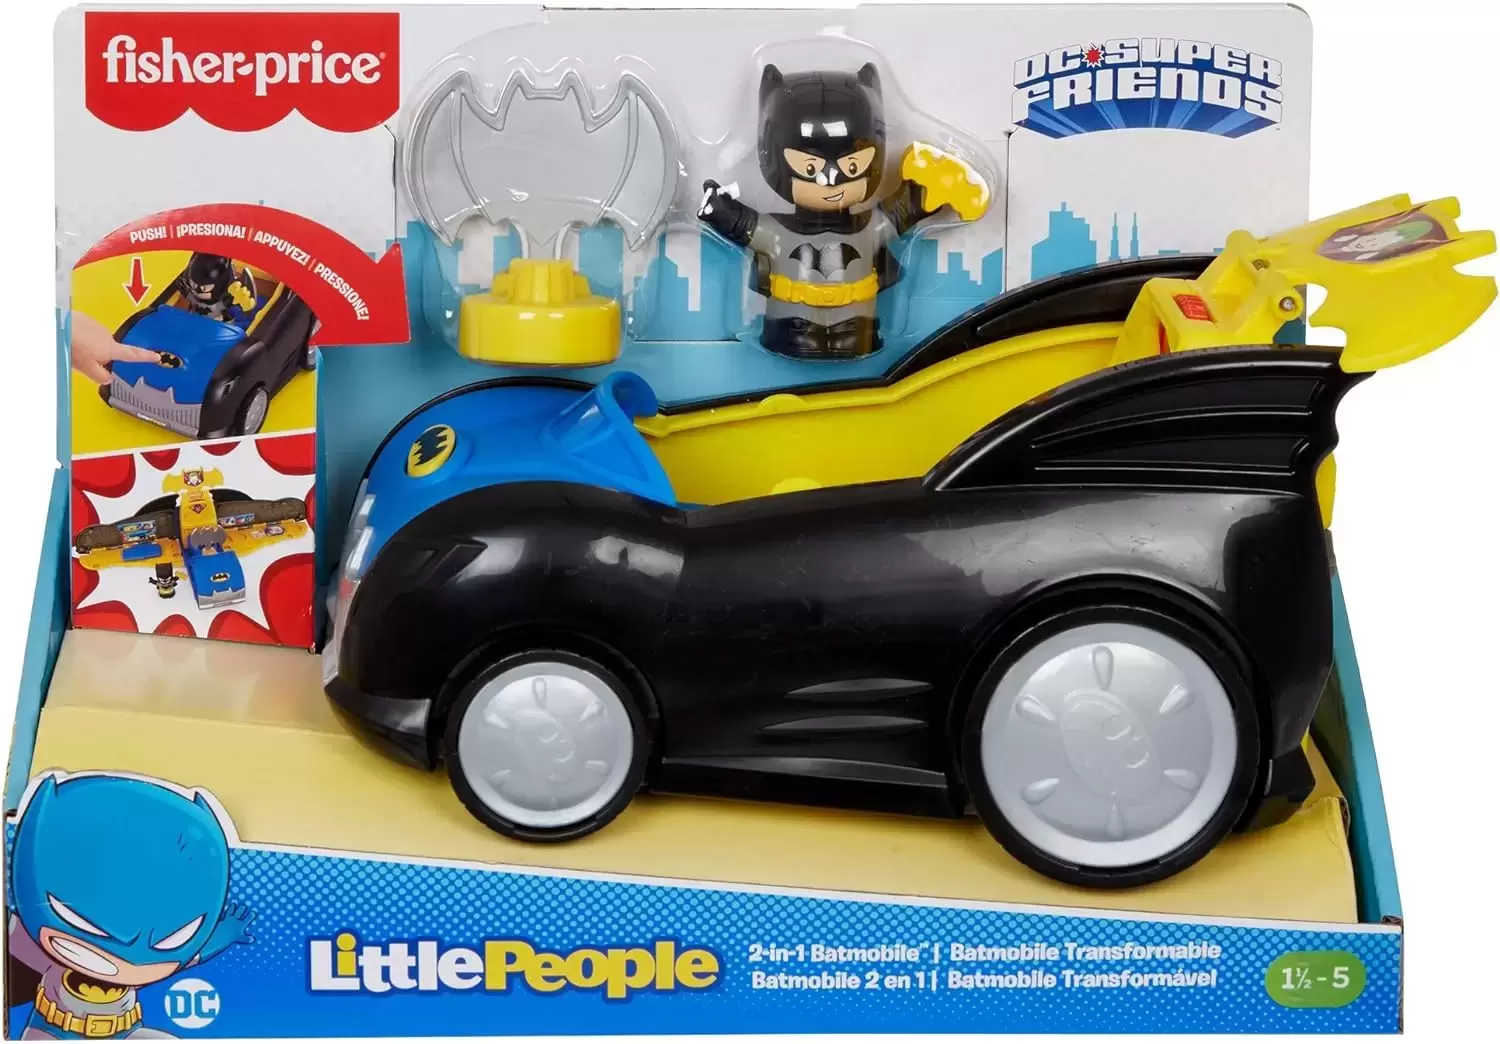 Little people - DC Super Friends - 2 in 1 Batmobile